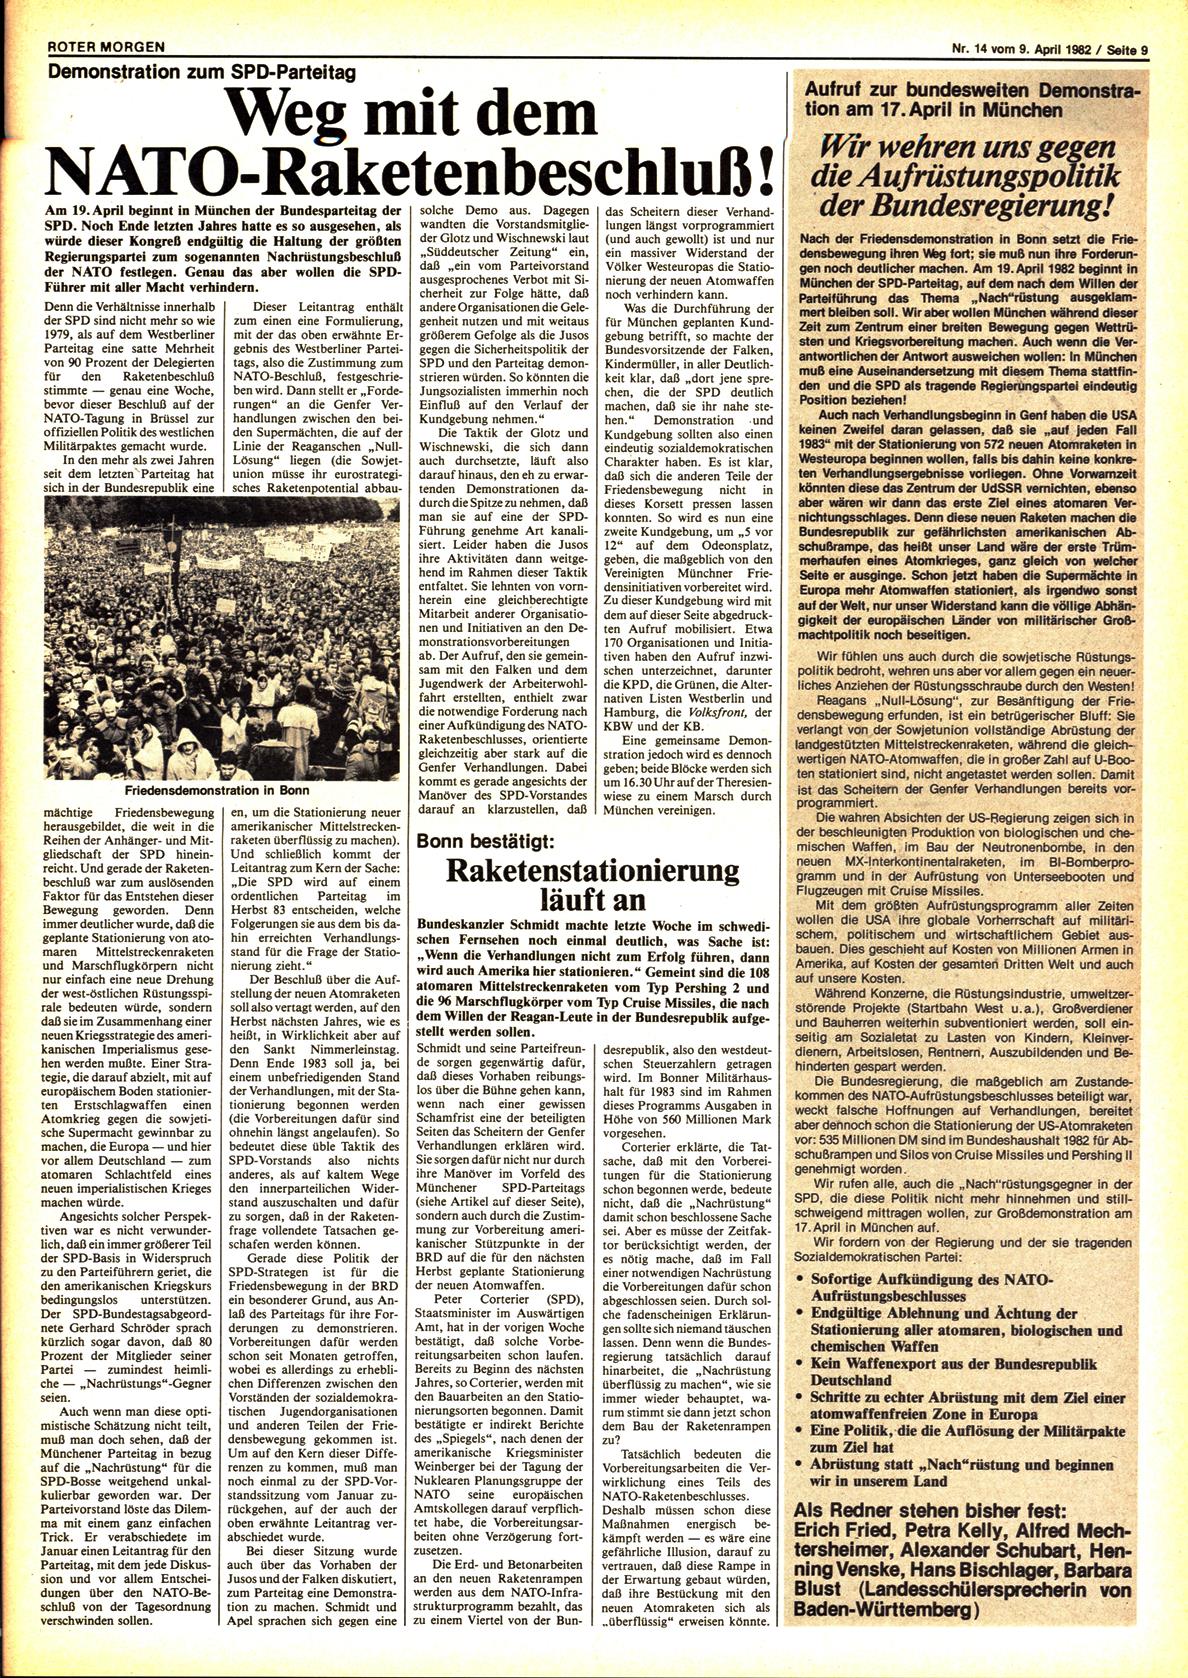 Roter Morgen, 16. Jg., 9. April  1982, Nr. 14, Seite 9